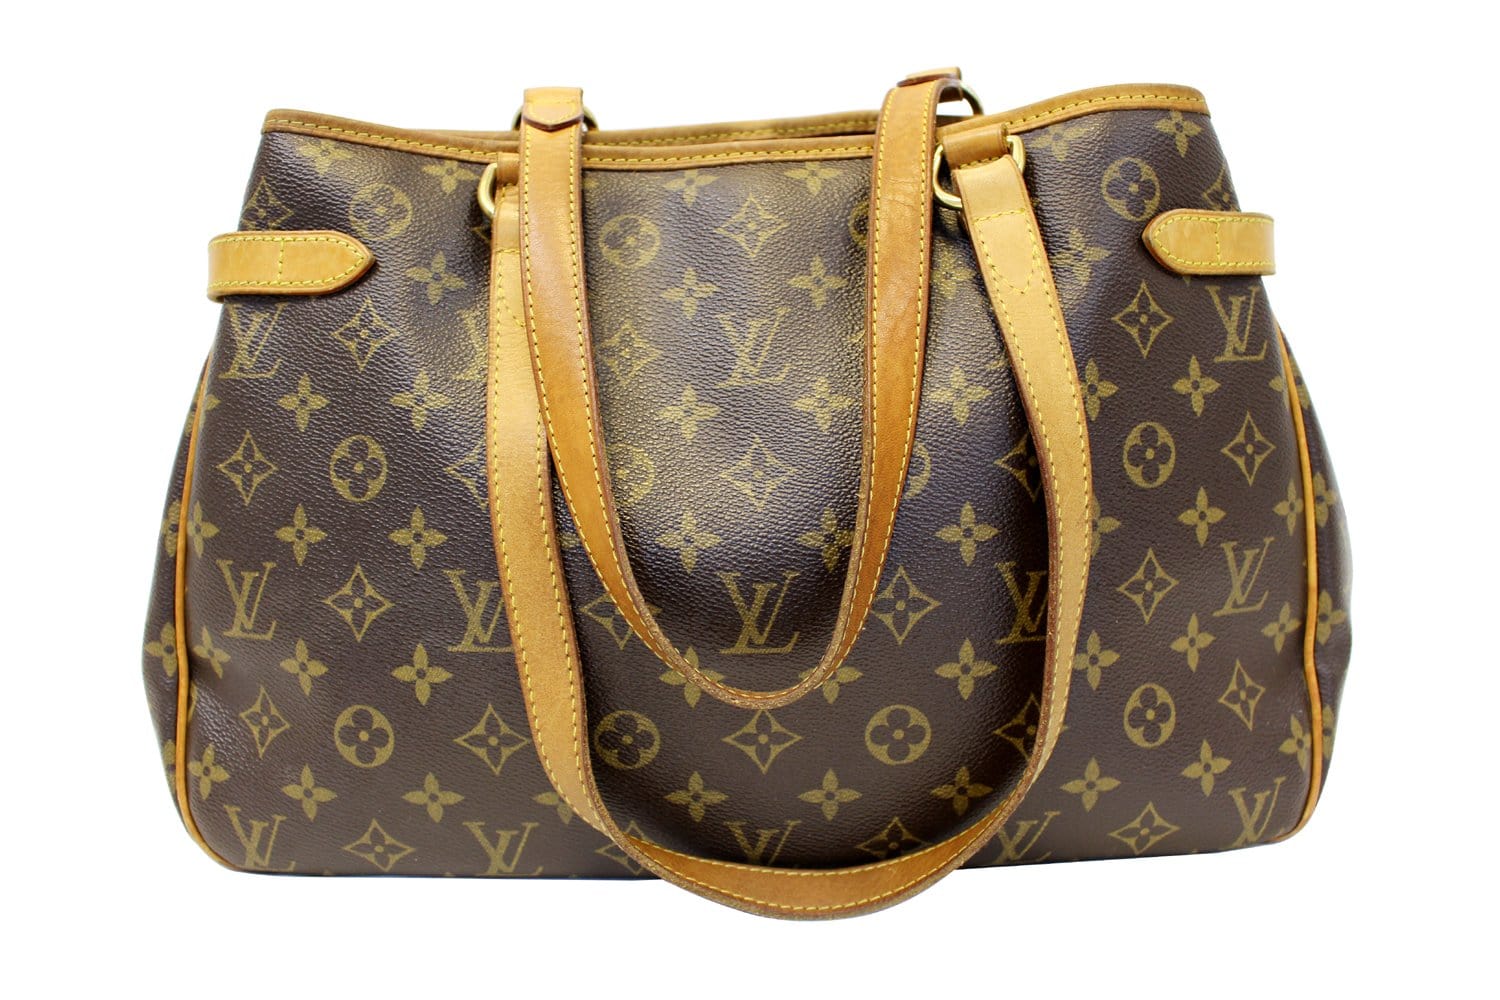 LV Bagatelle Bag: A Luxurious Accessory 😍